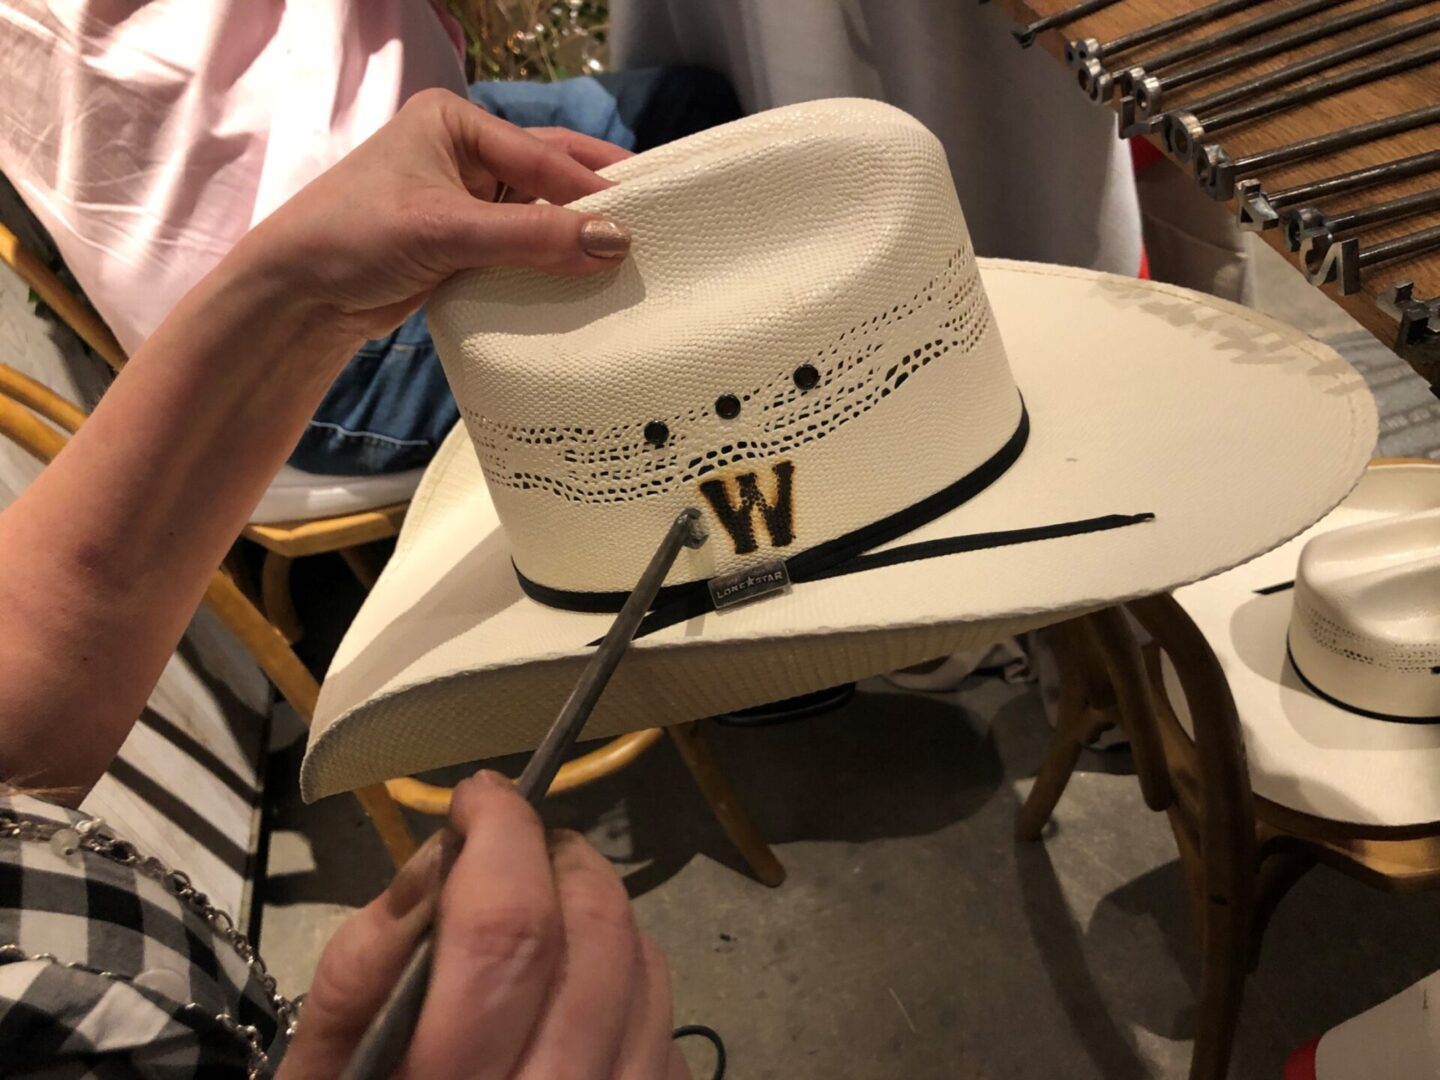 Branding a cowboy hat